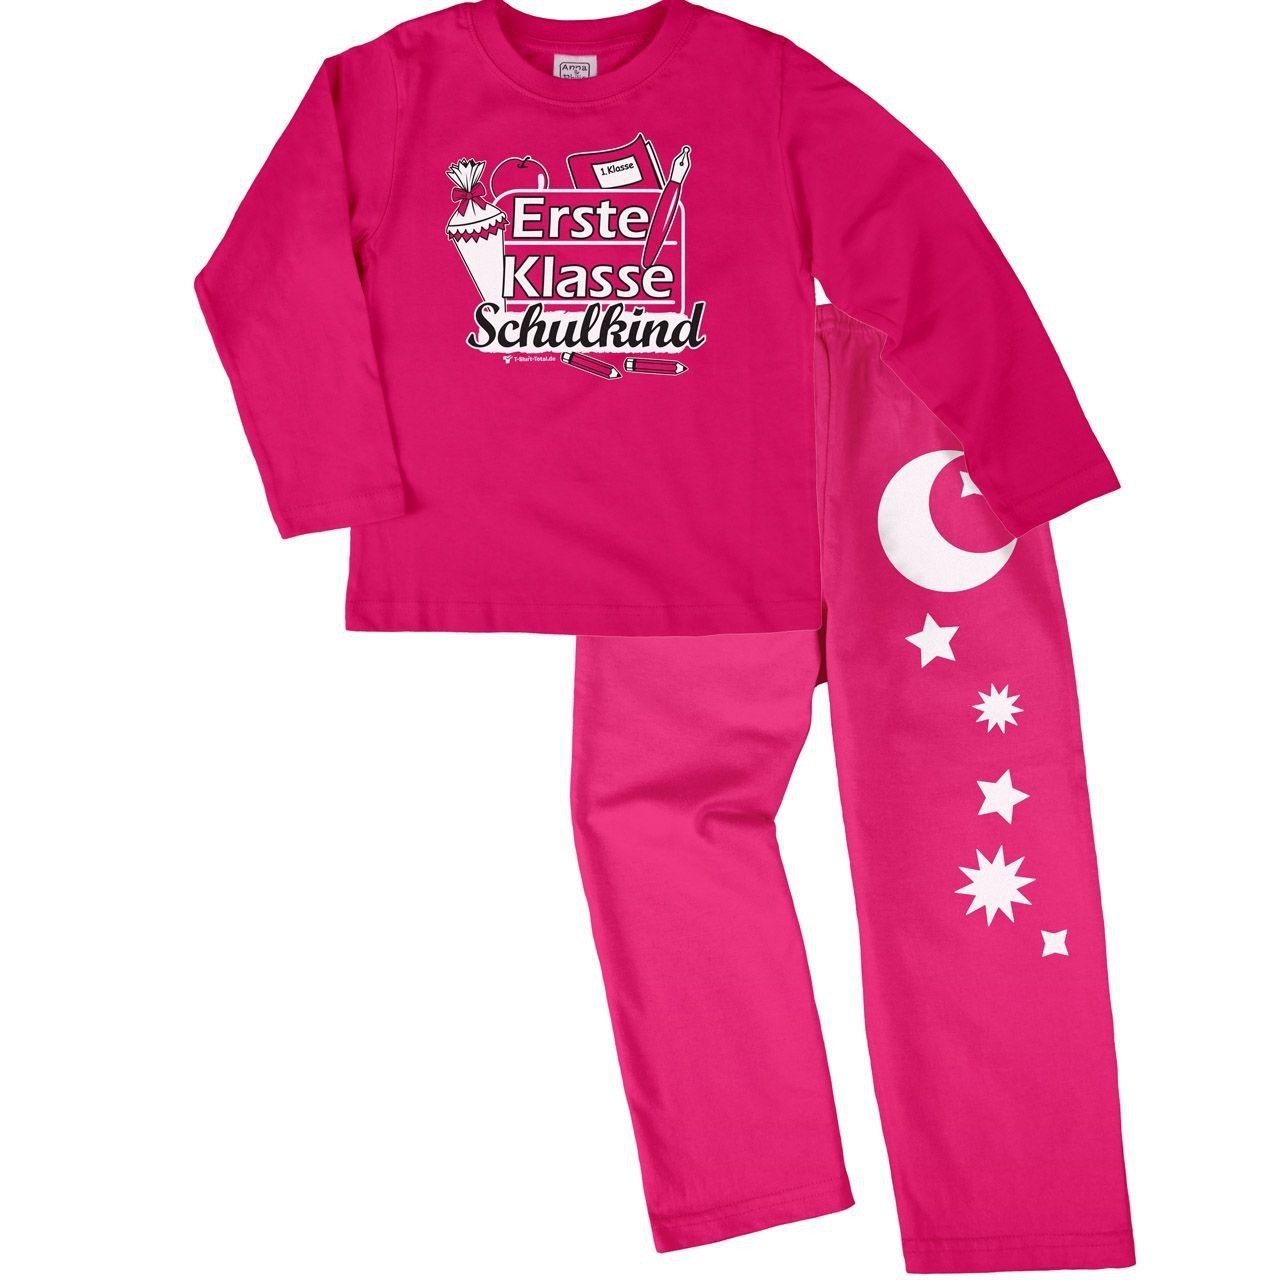 Erste Klasse Schulkind Pyjama Set pink / pink 122 / 128